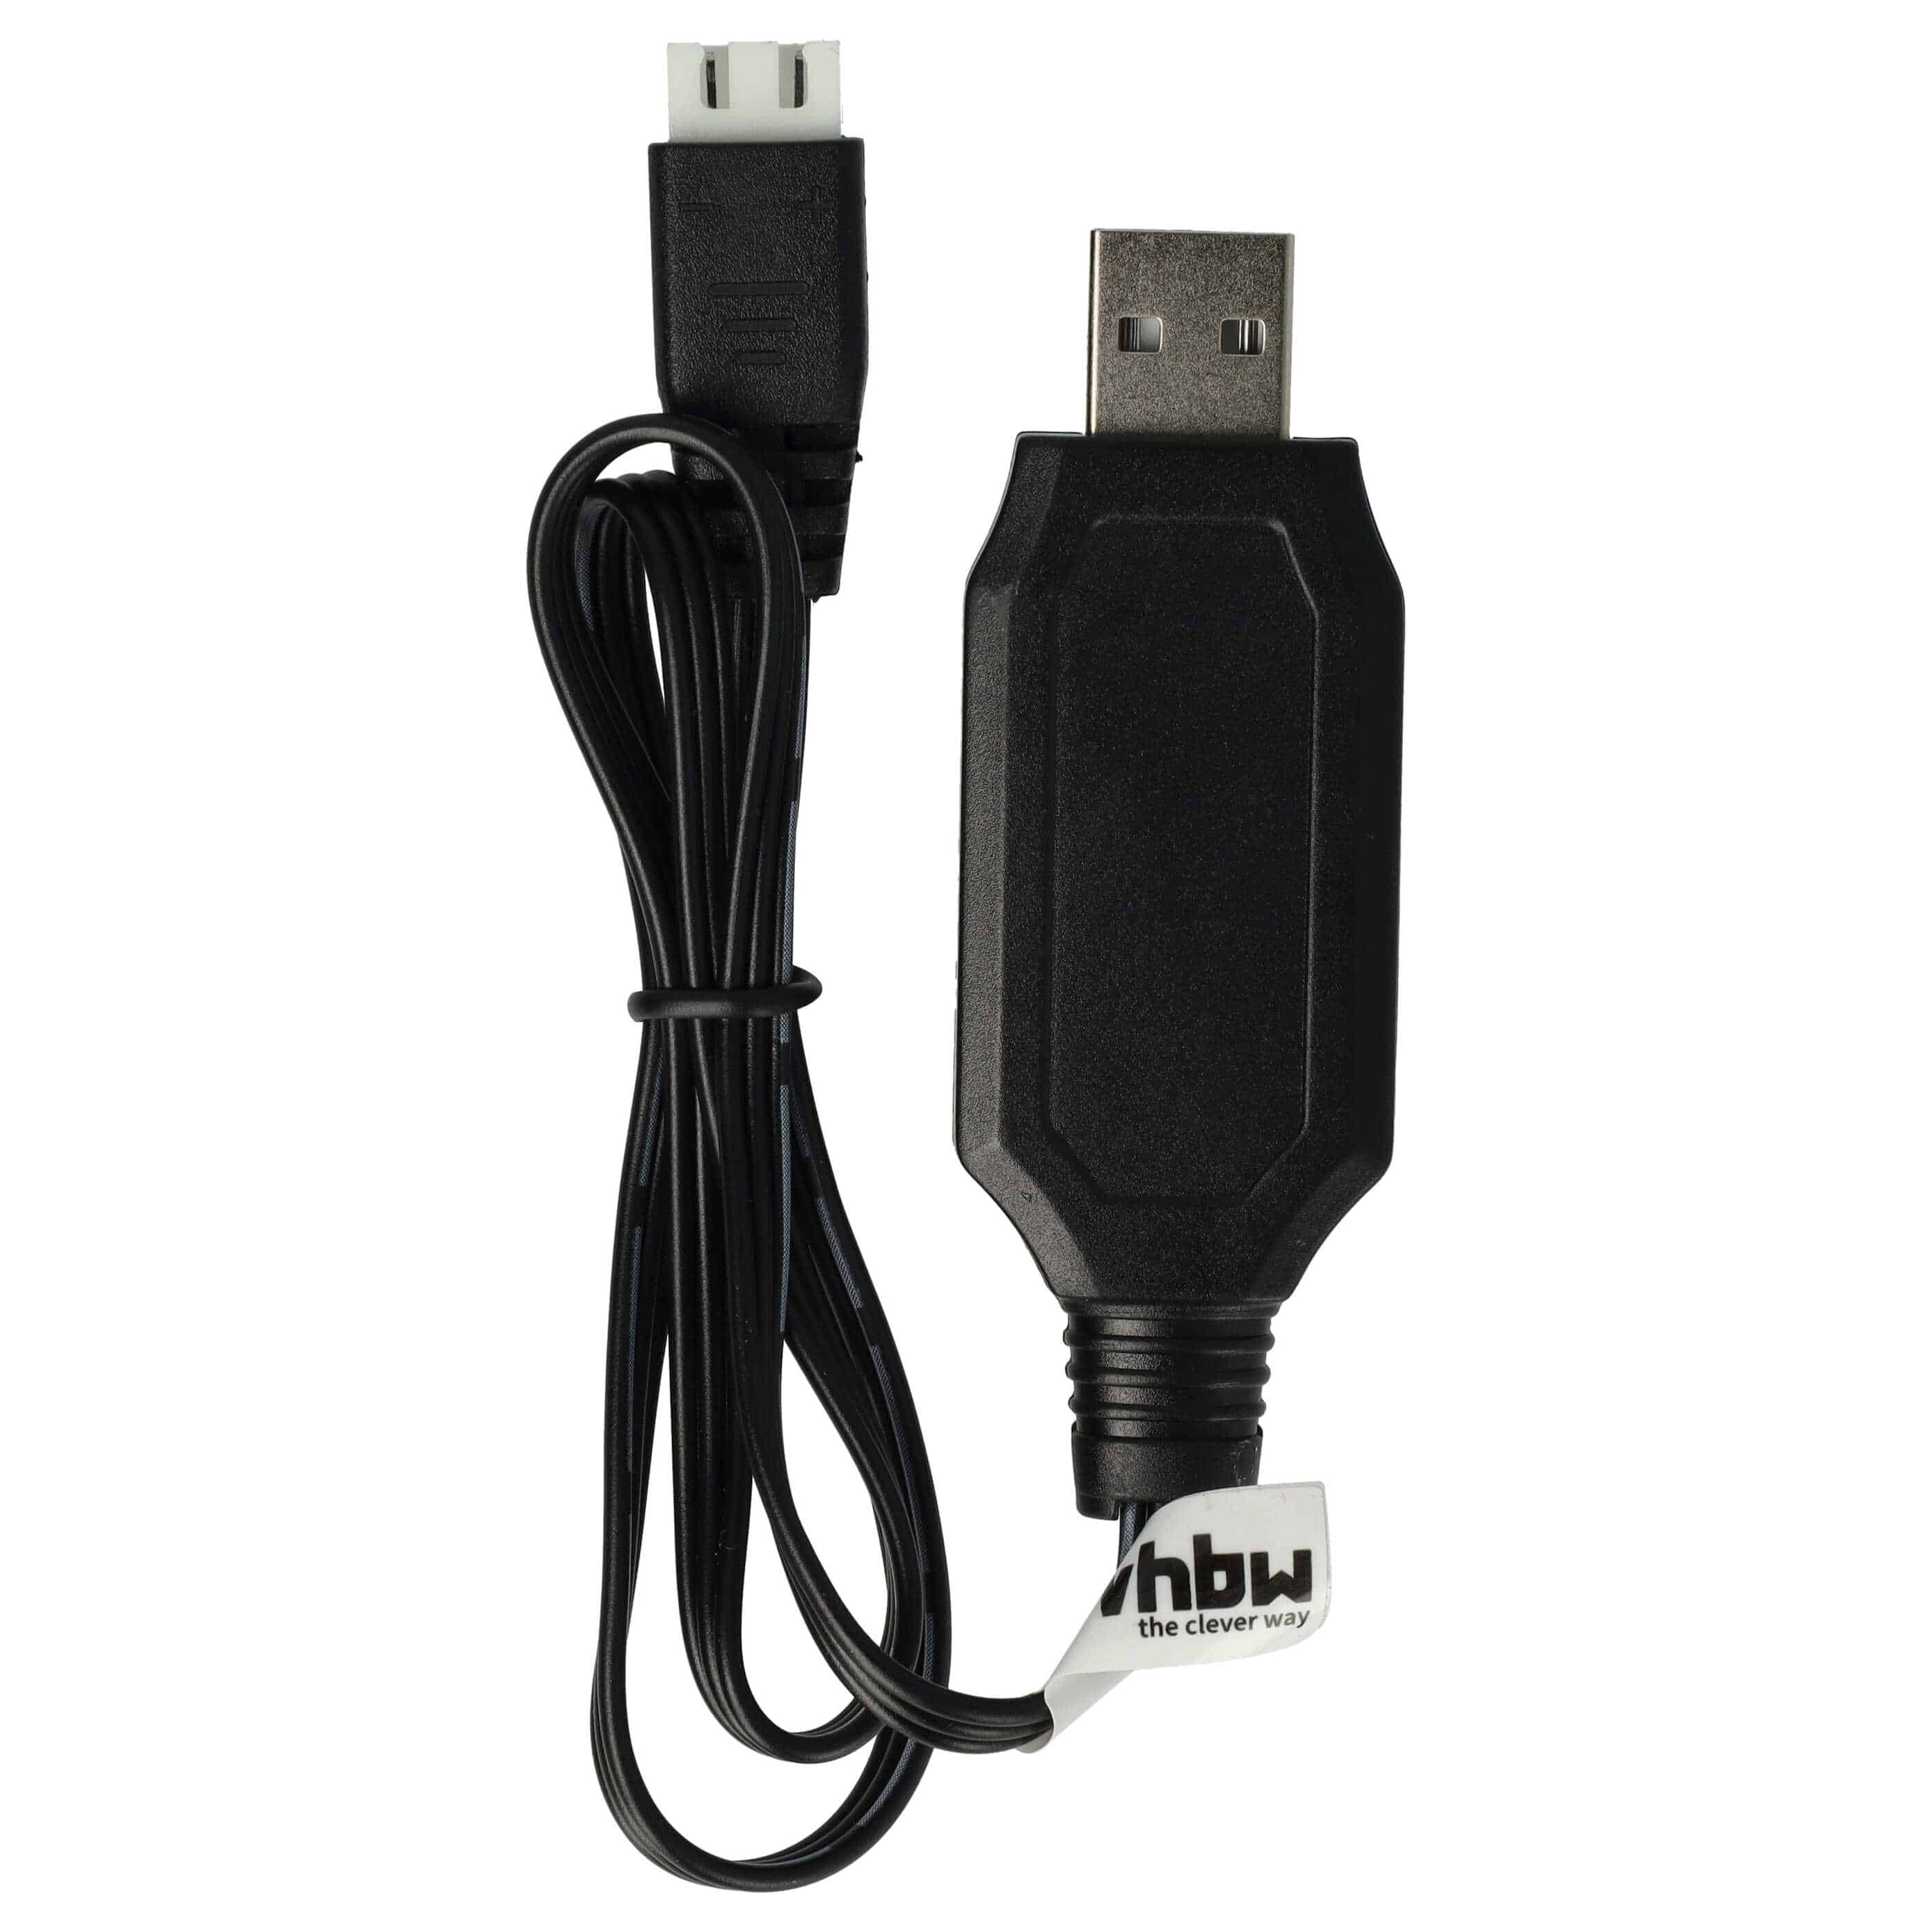 USB-Ladekabel passend für RC-Akkus mit JST XH-3P-Anschluss, RC-Modellbau Akkupacks - 60cm 4,2V